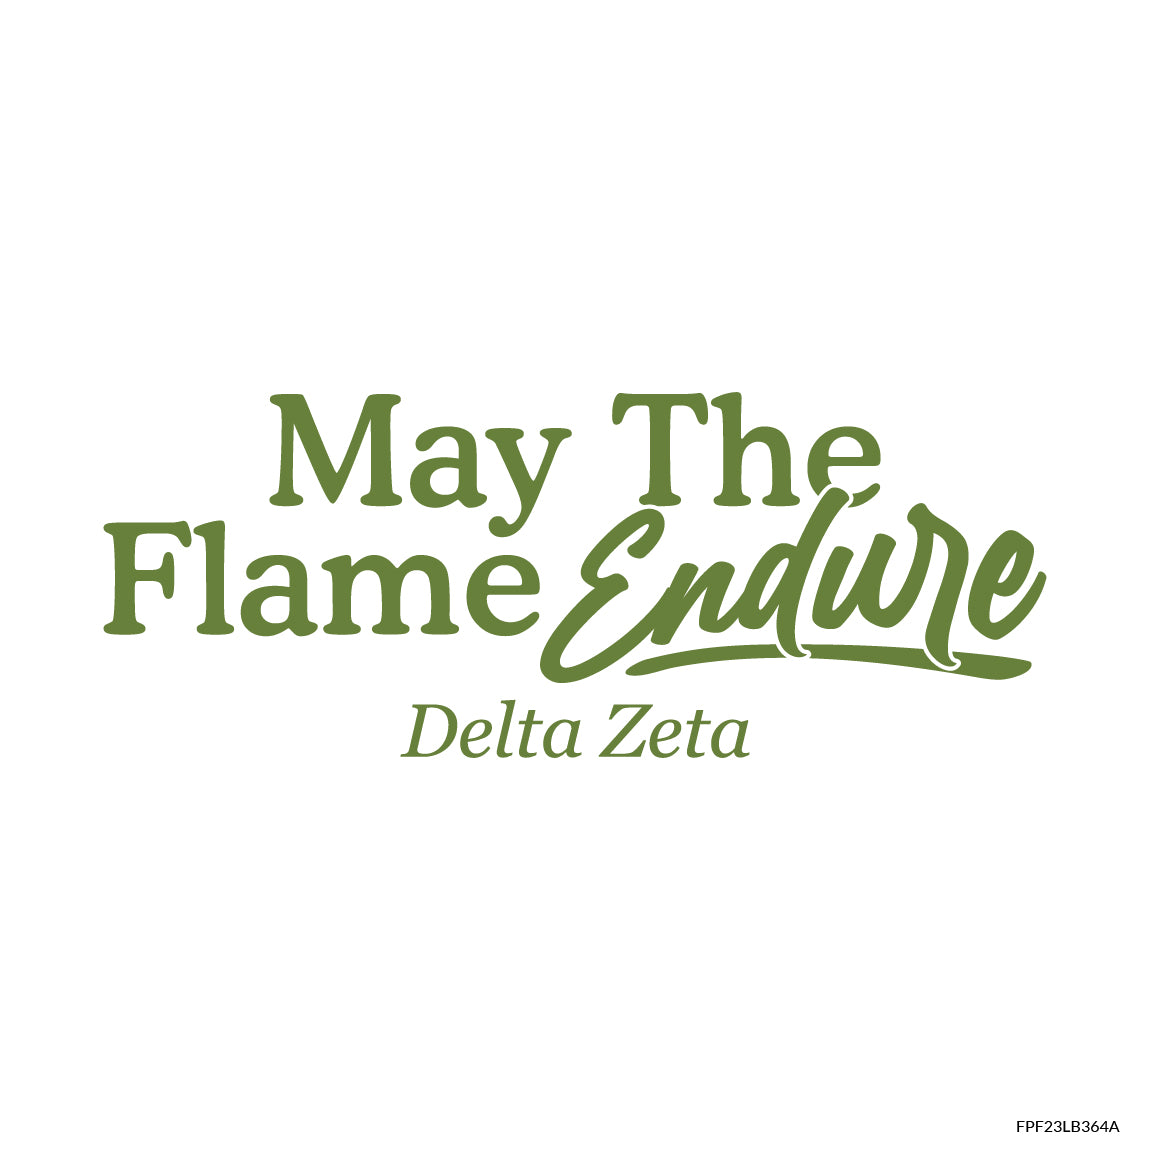 Endure the Flame